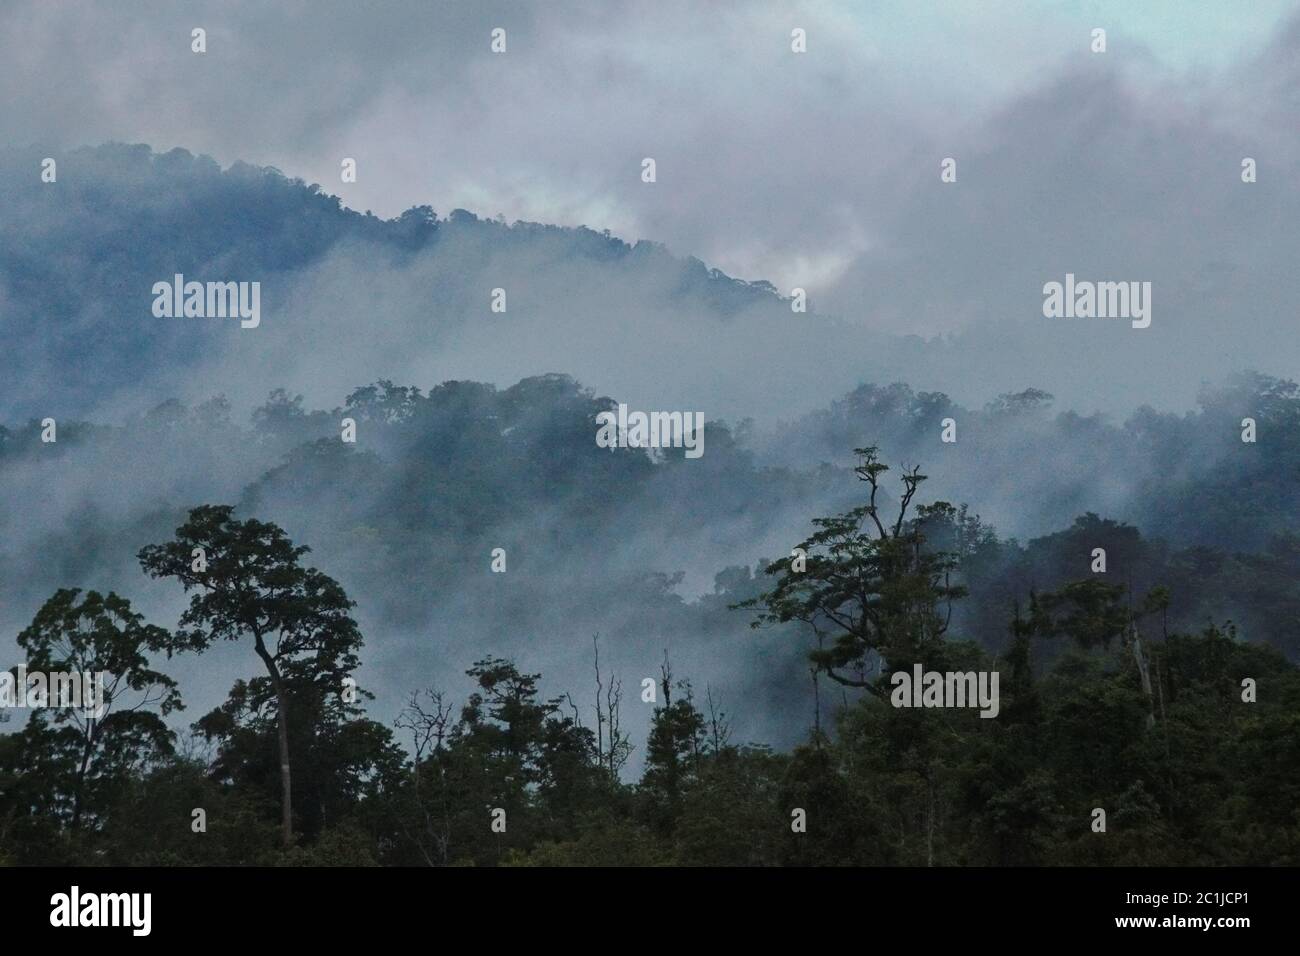 Misty, tropical rainforest of Sulawesi, Indonesia. Stock Photo